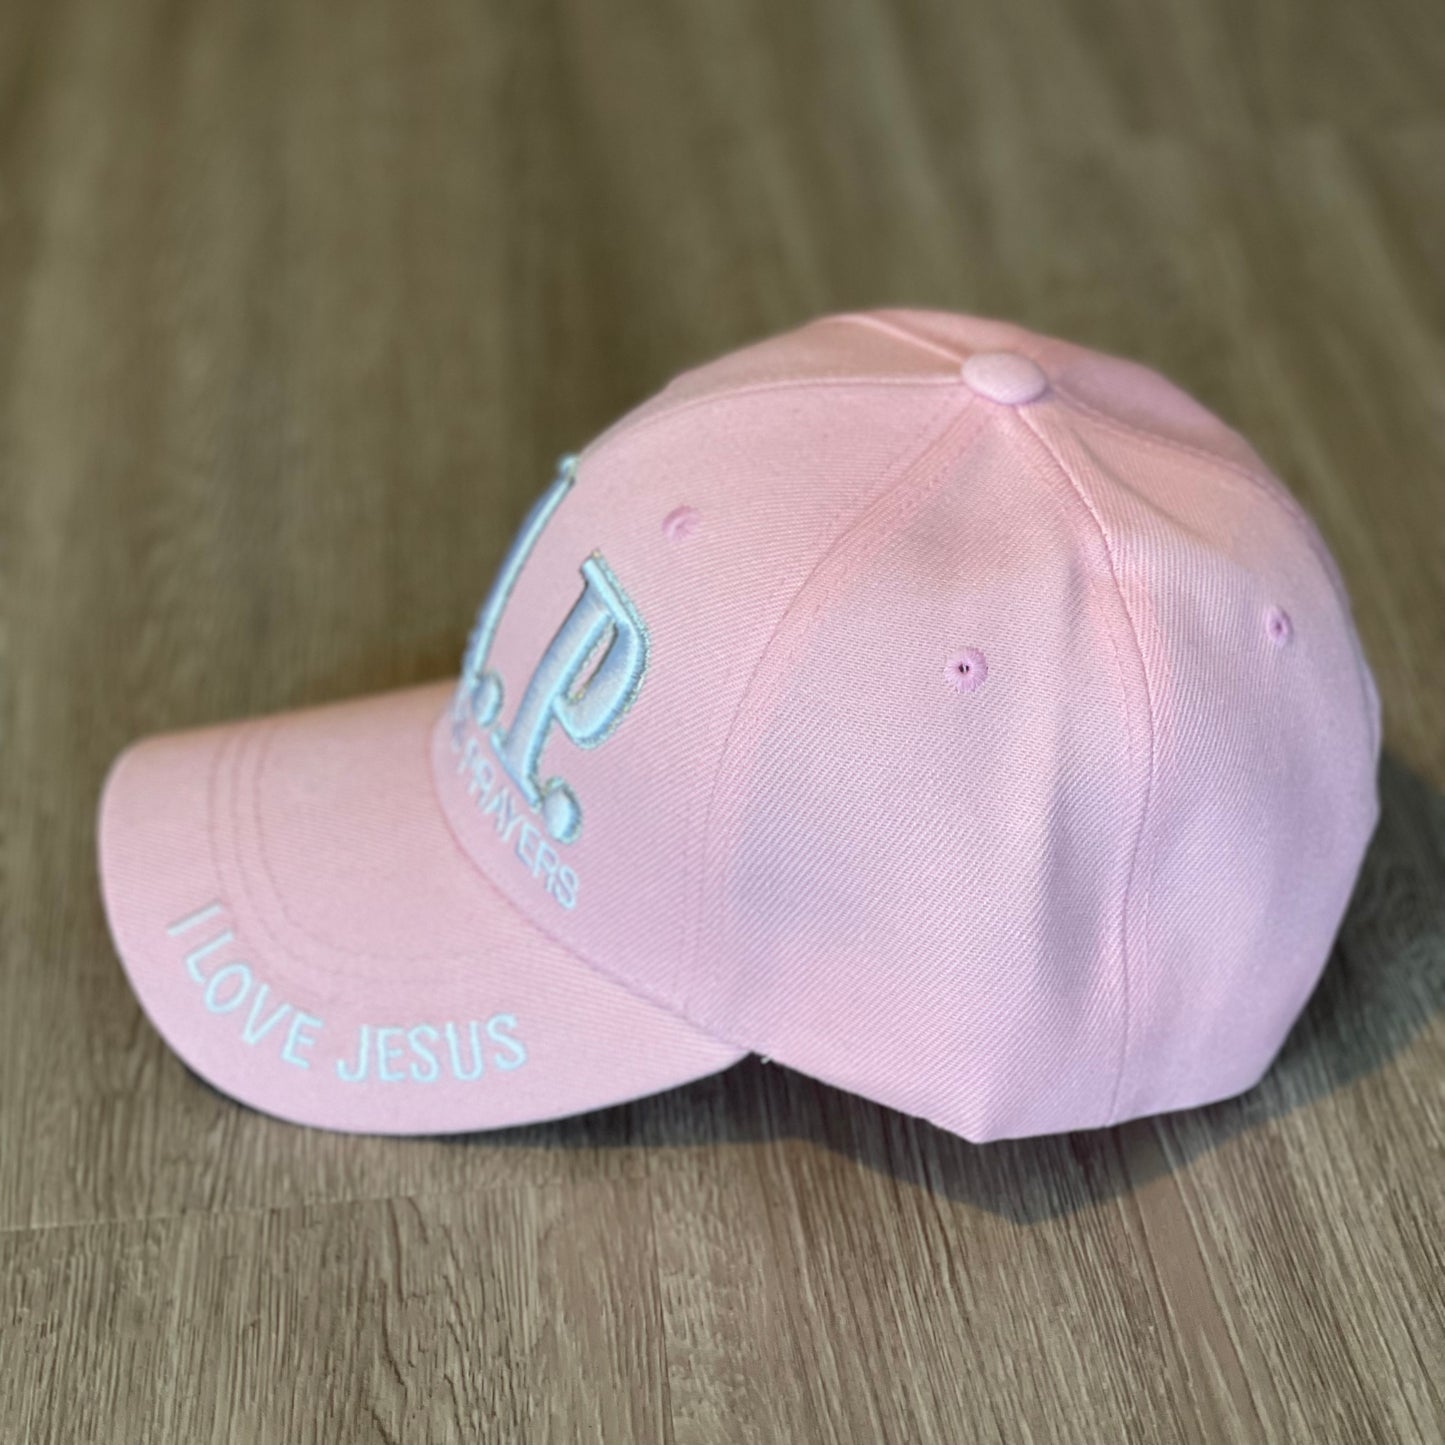 G.A.P. (God Answers Prayers) Baseball Cap - Light Pink